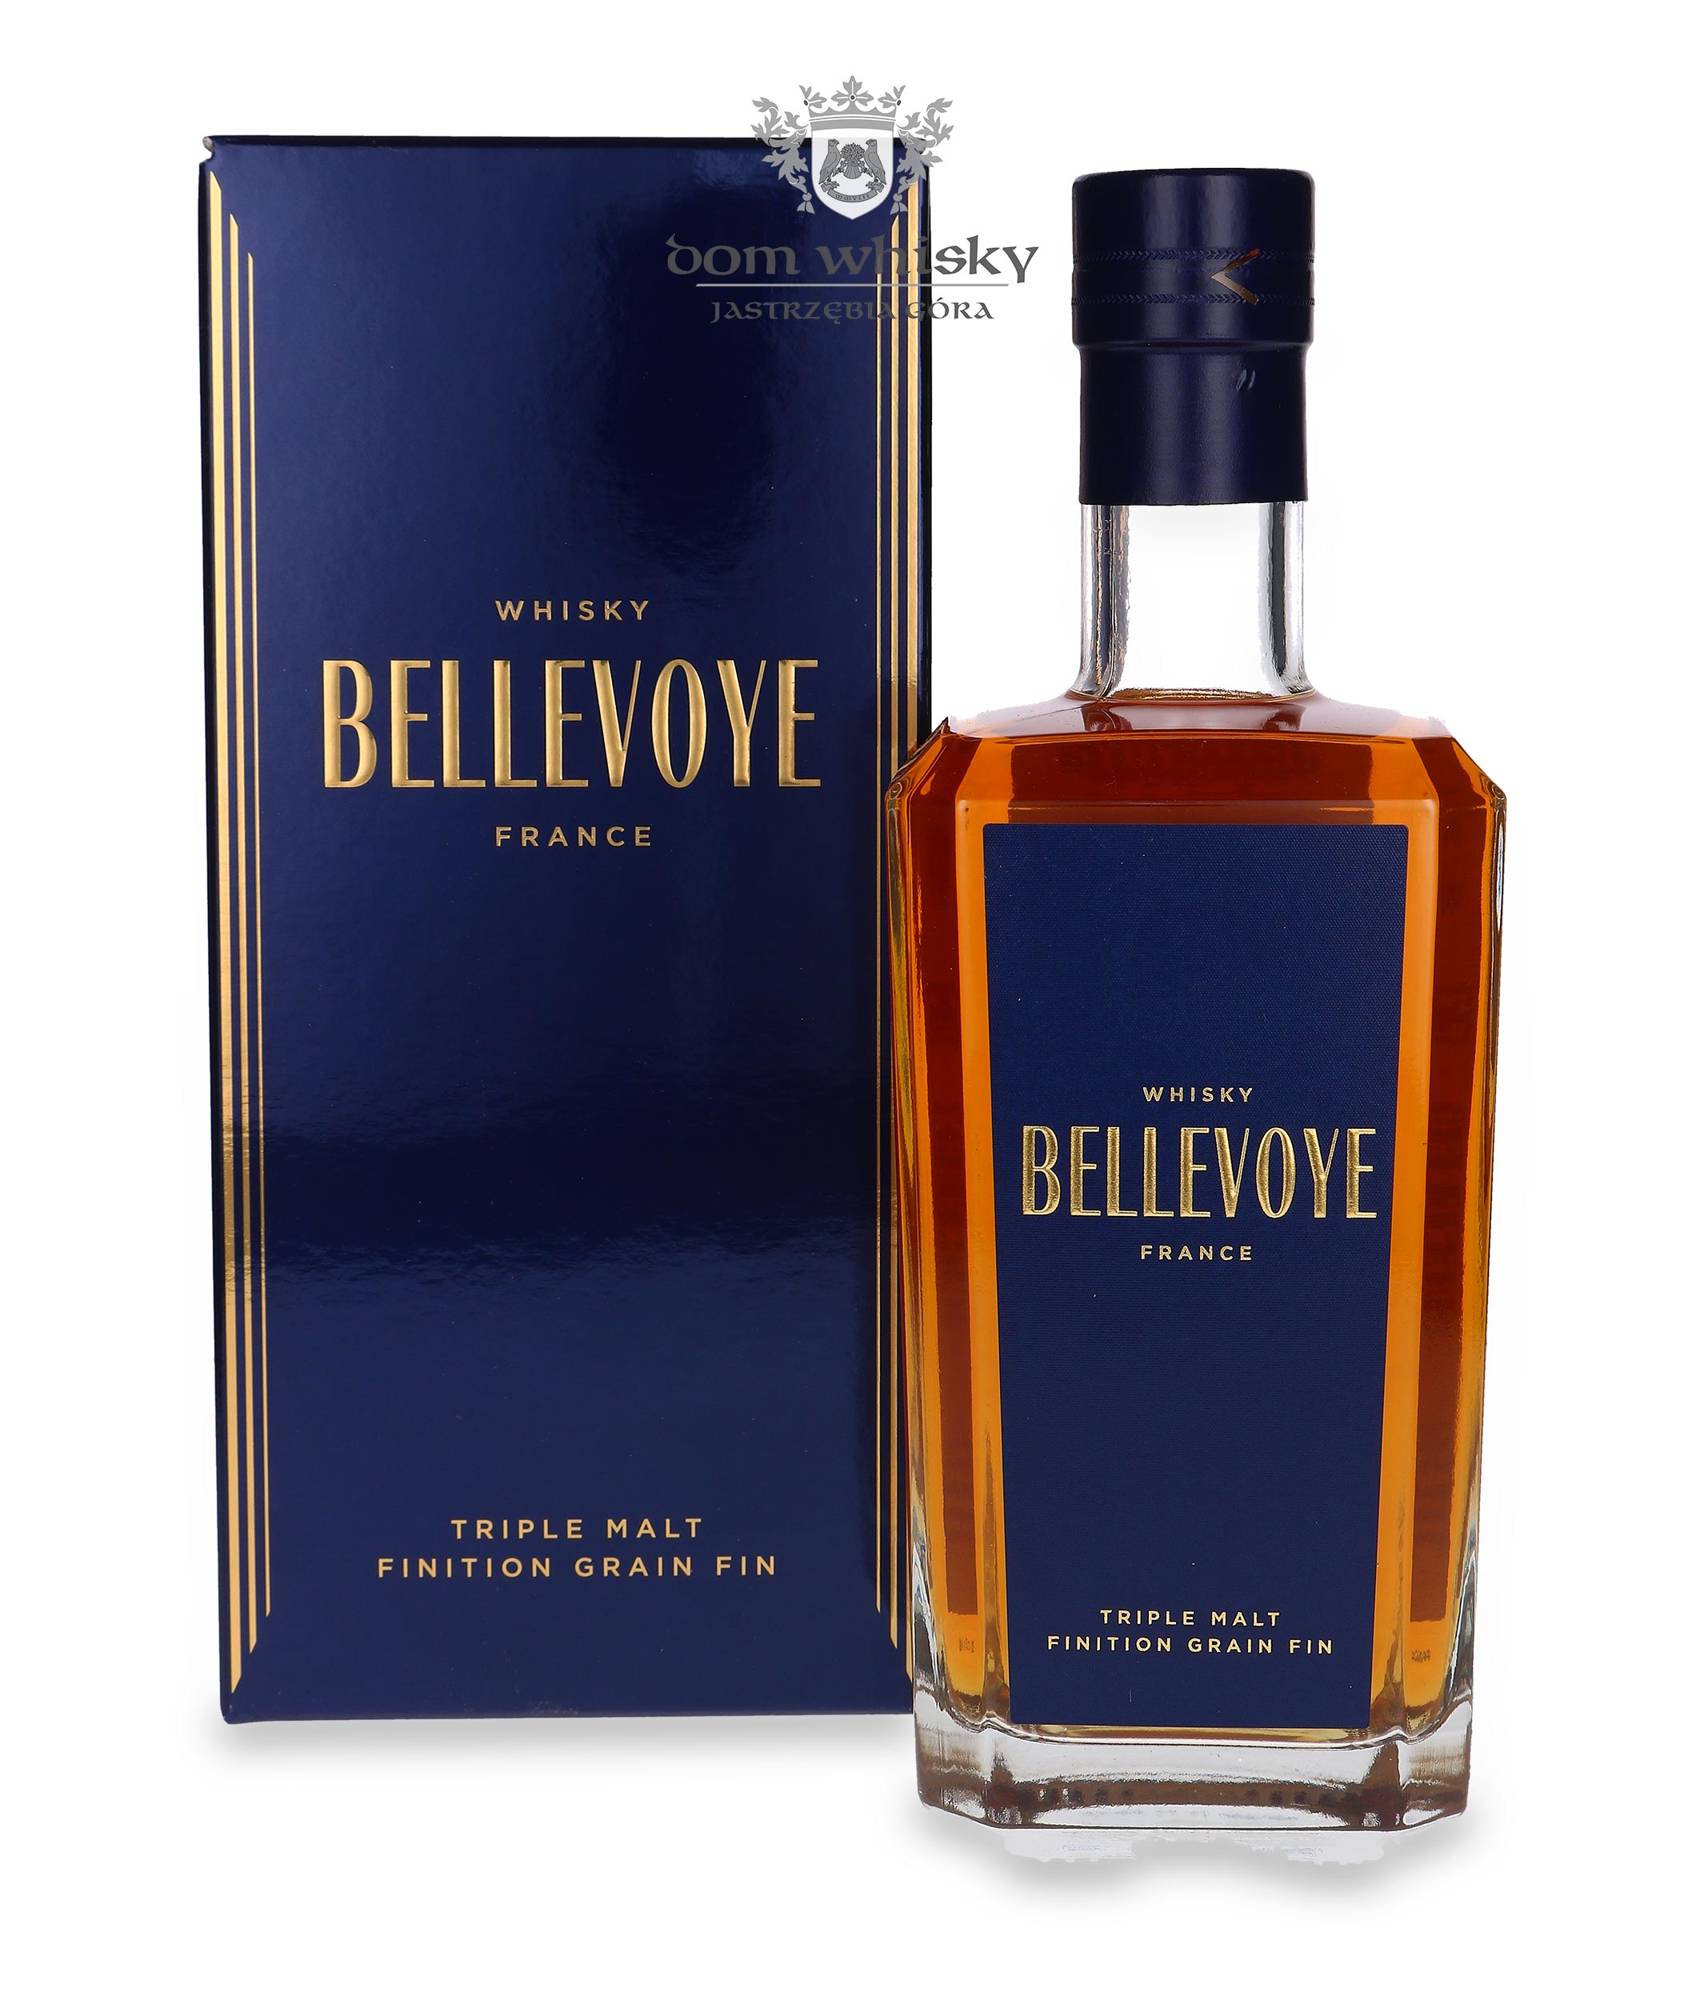 Bellevoye Whisky Finition Grand Cru France 700ml